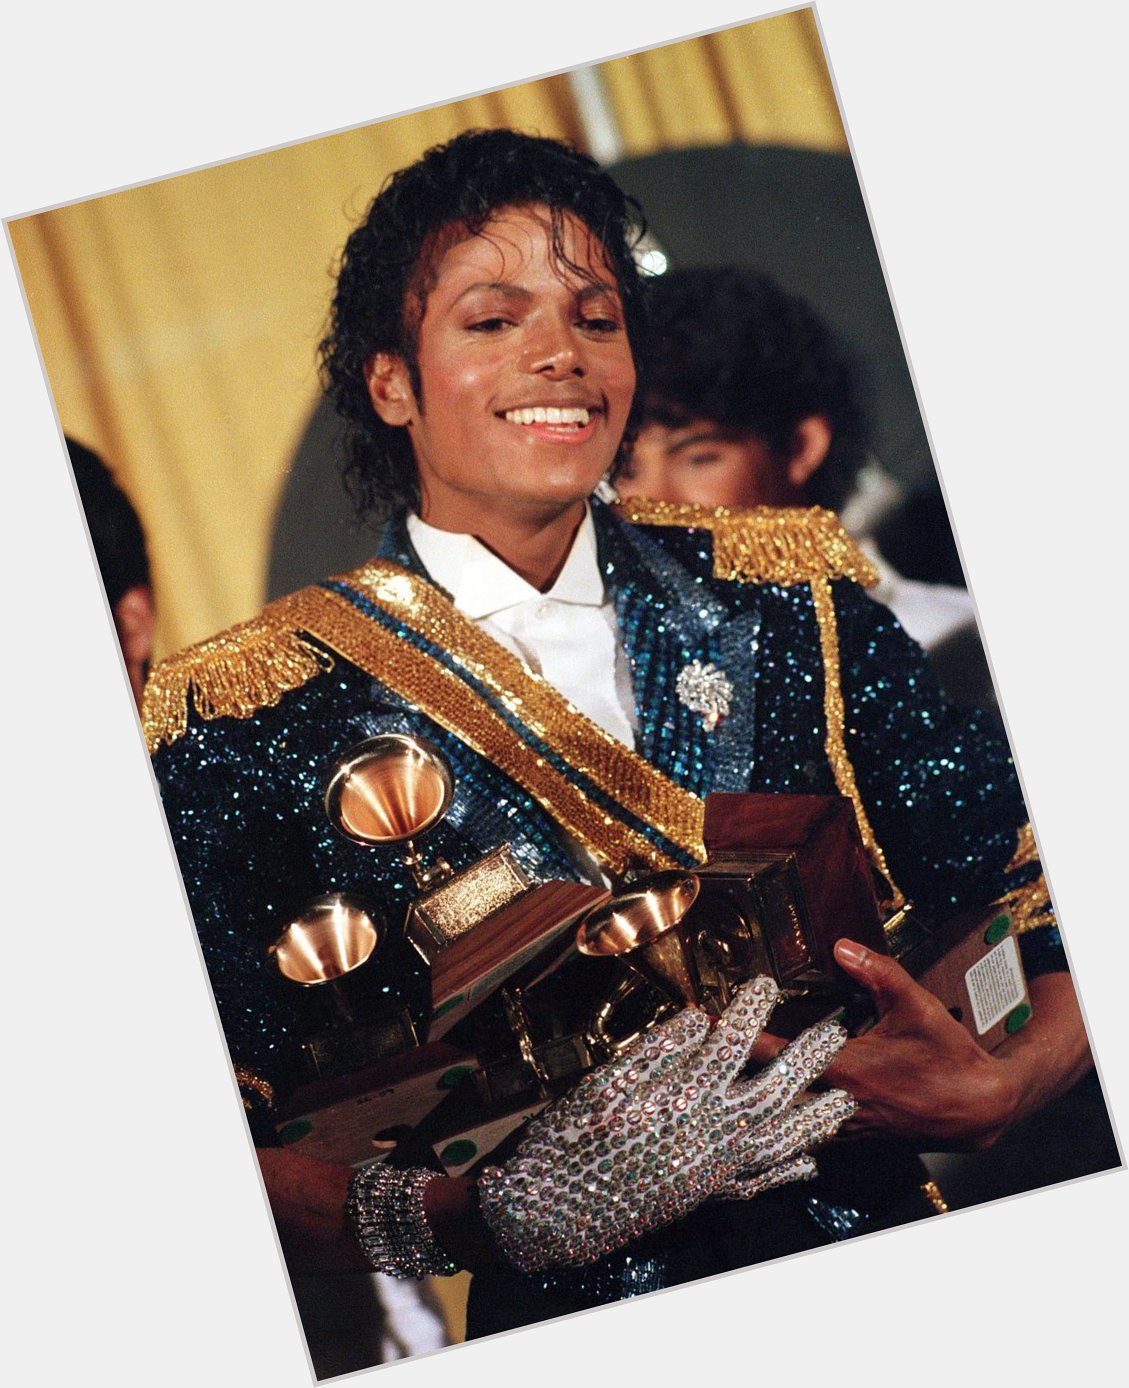 Happy 63rd birthday to Michael Jackson. 